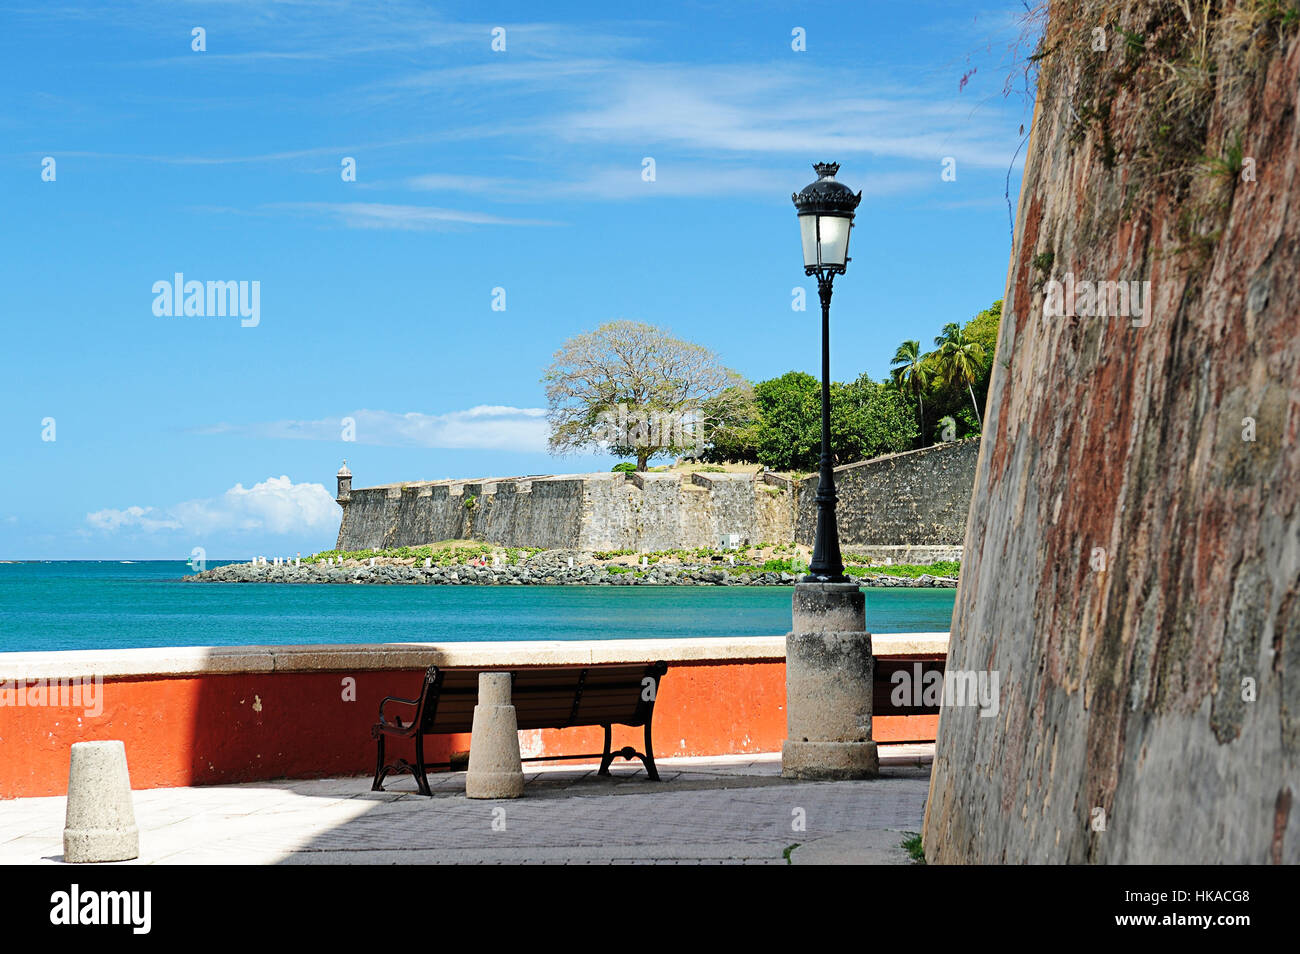 Pier accanto a fort in Puerto Rico Foto Stock